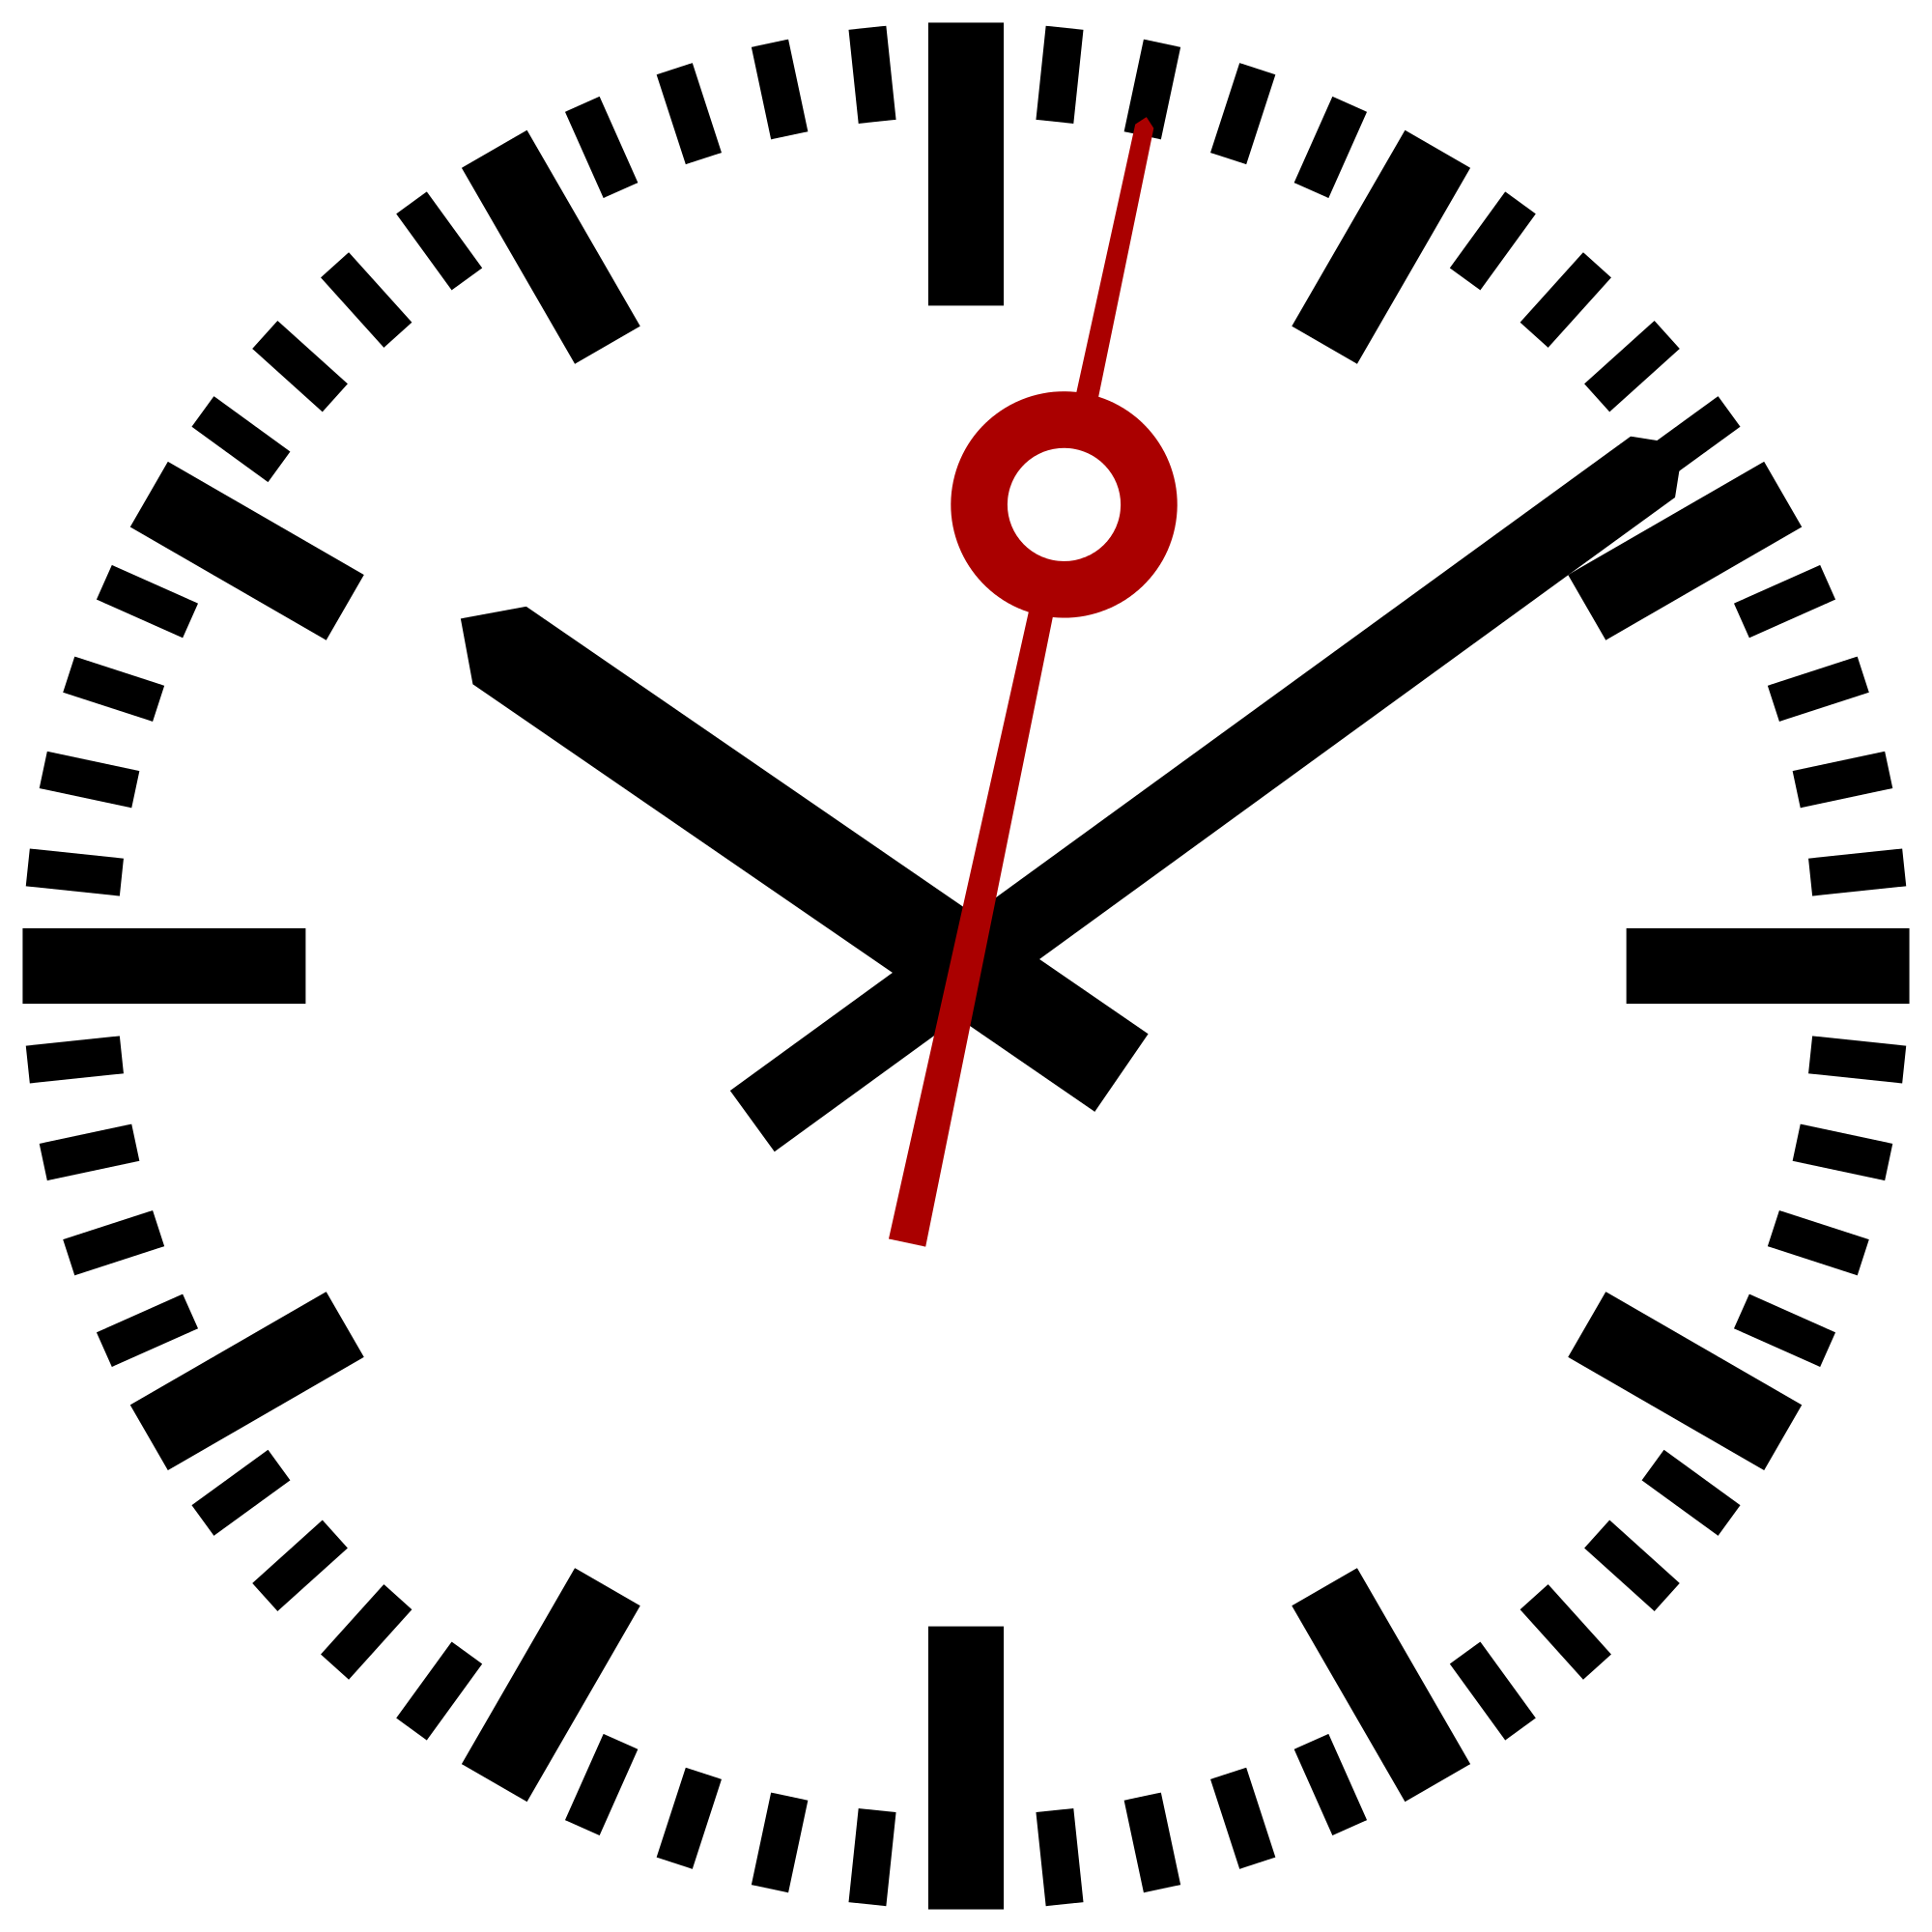 Swiss Railway Clock - Animated Gif Clock Ticking (2000x2000)